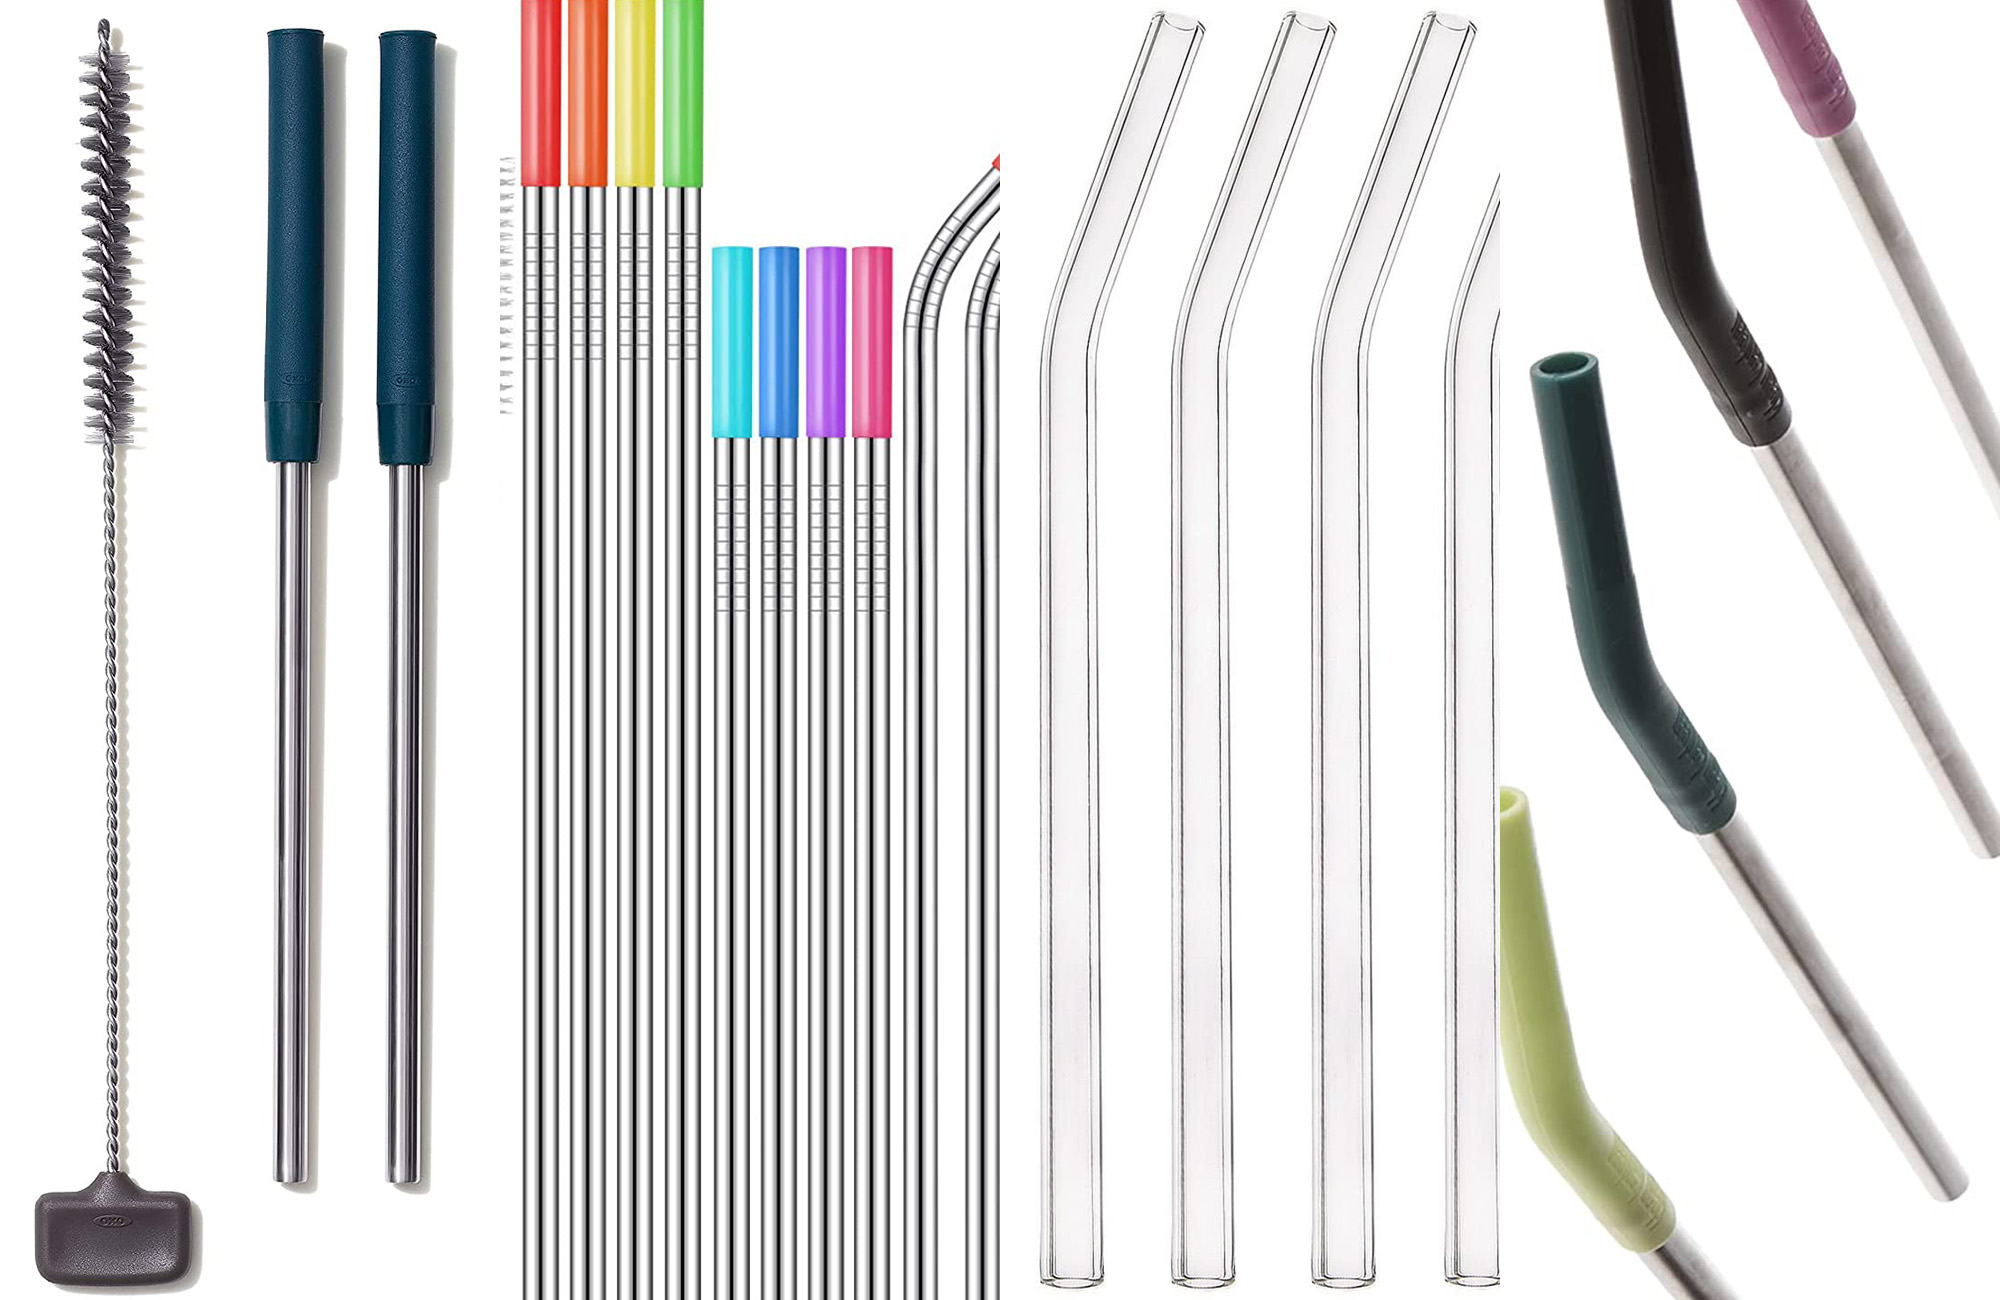 https://www.popsci.com/uploads/2022/02/31/best-reusable-straws-header.jpg?auto=webp